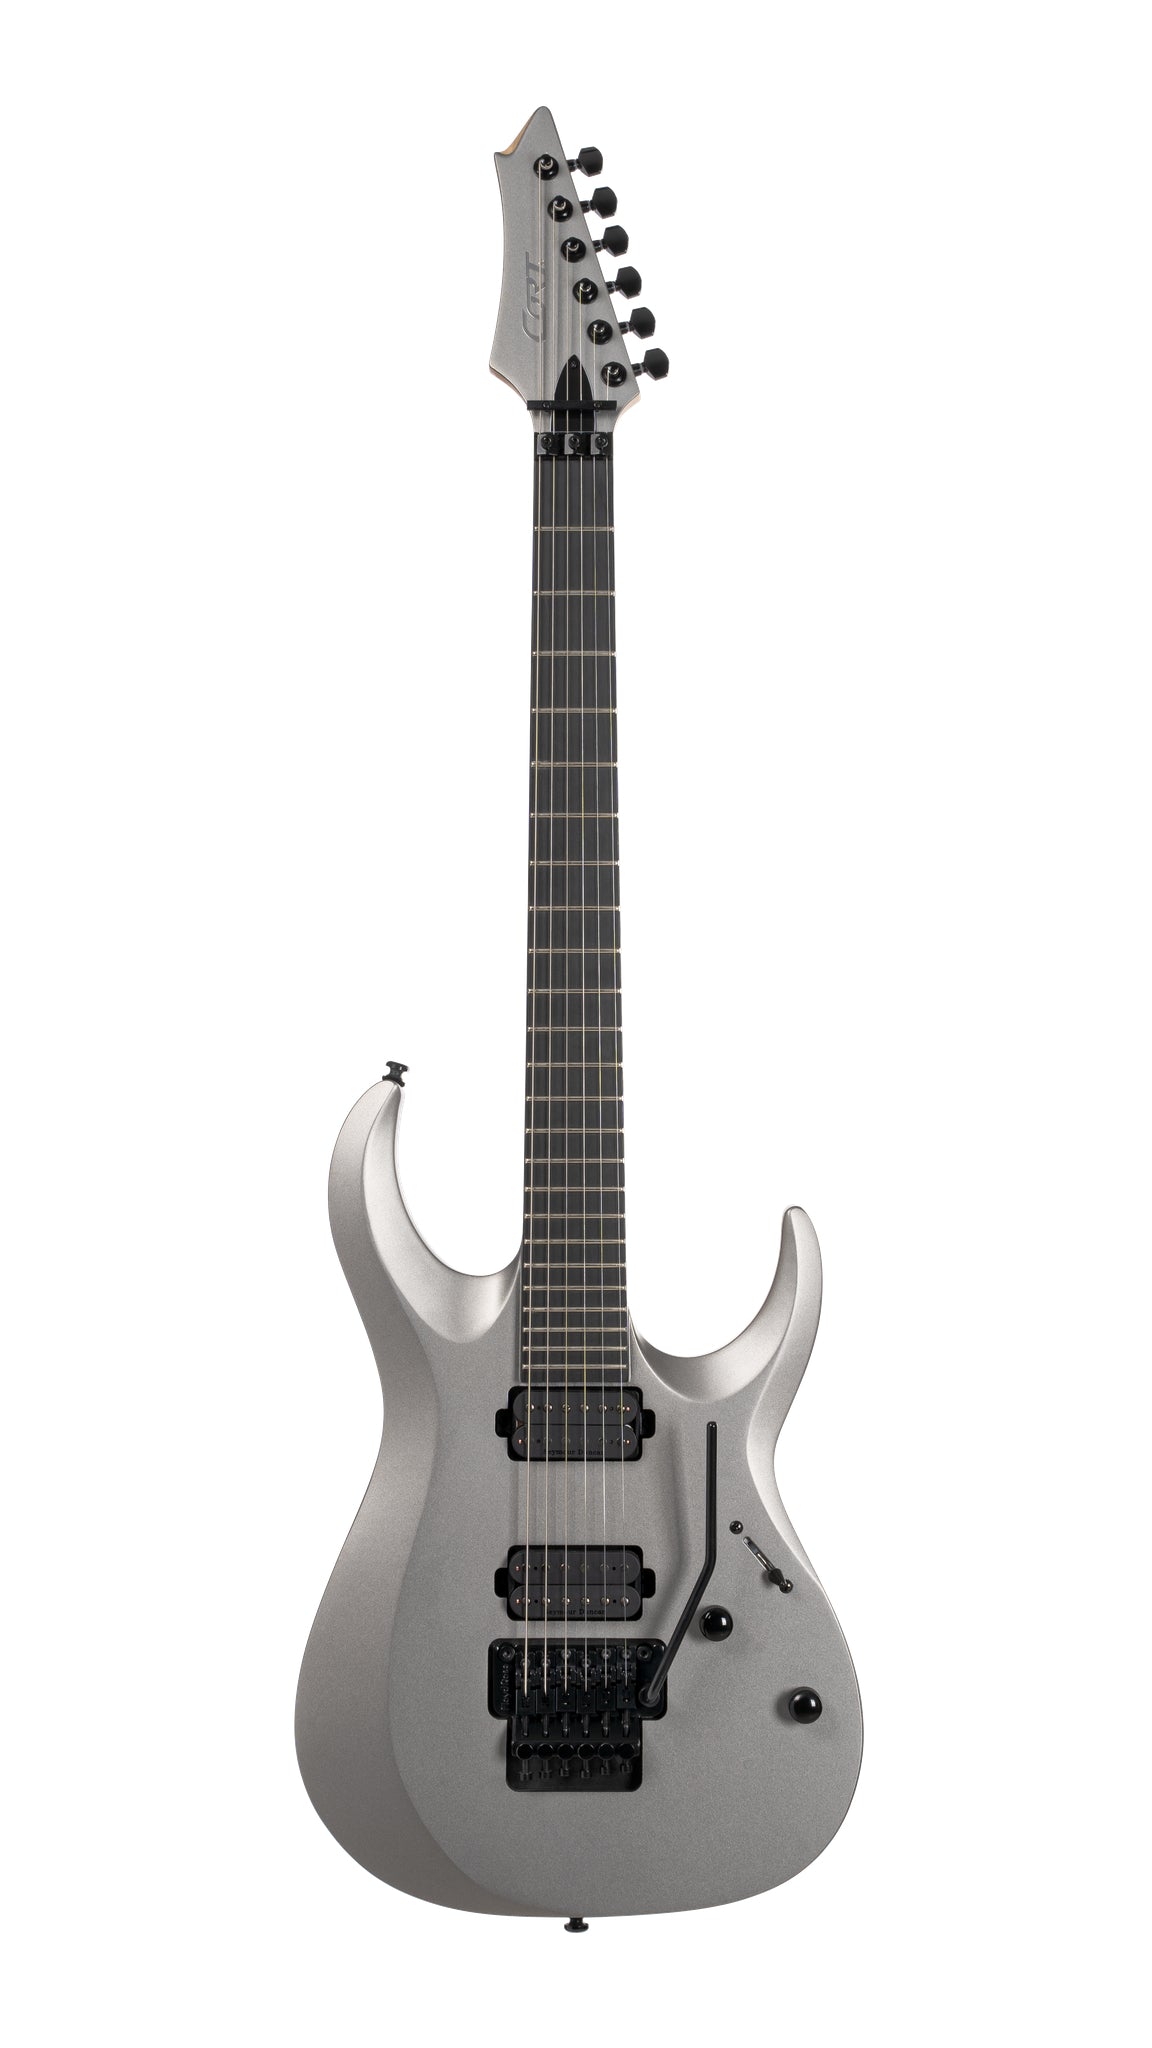 Cort X500 Menace GS, Electric Guitar for sale at Richards Guitars.